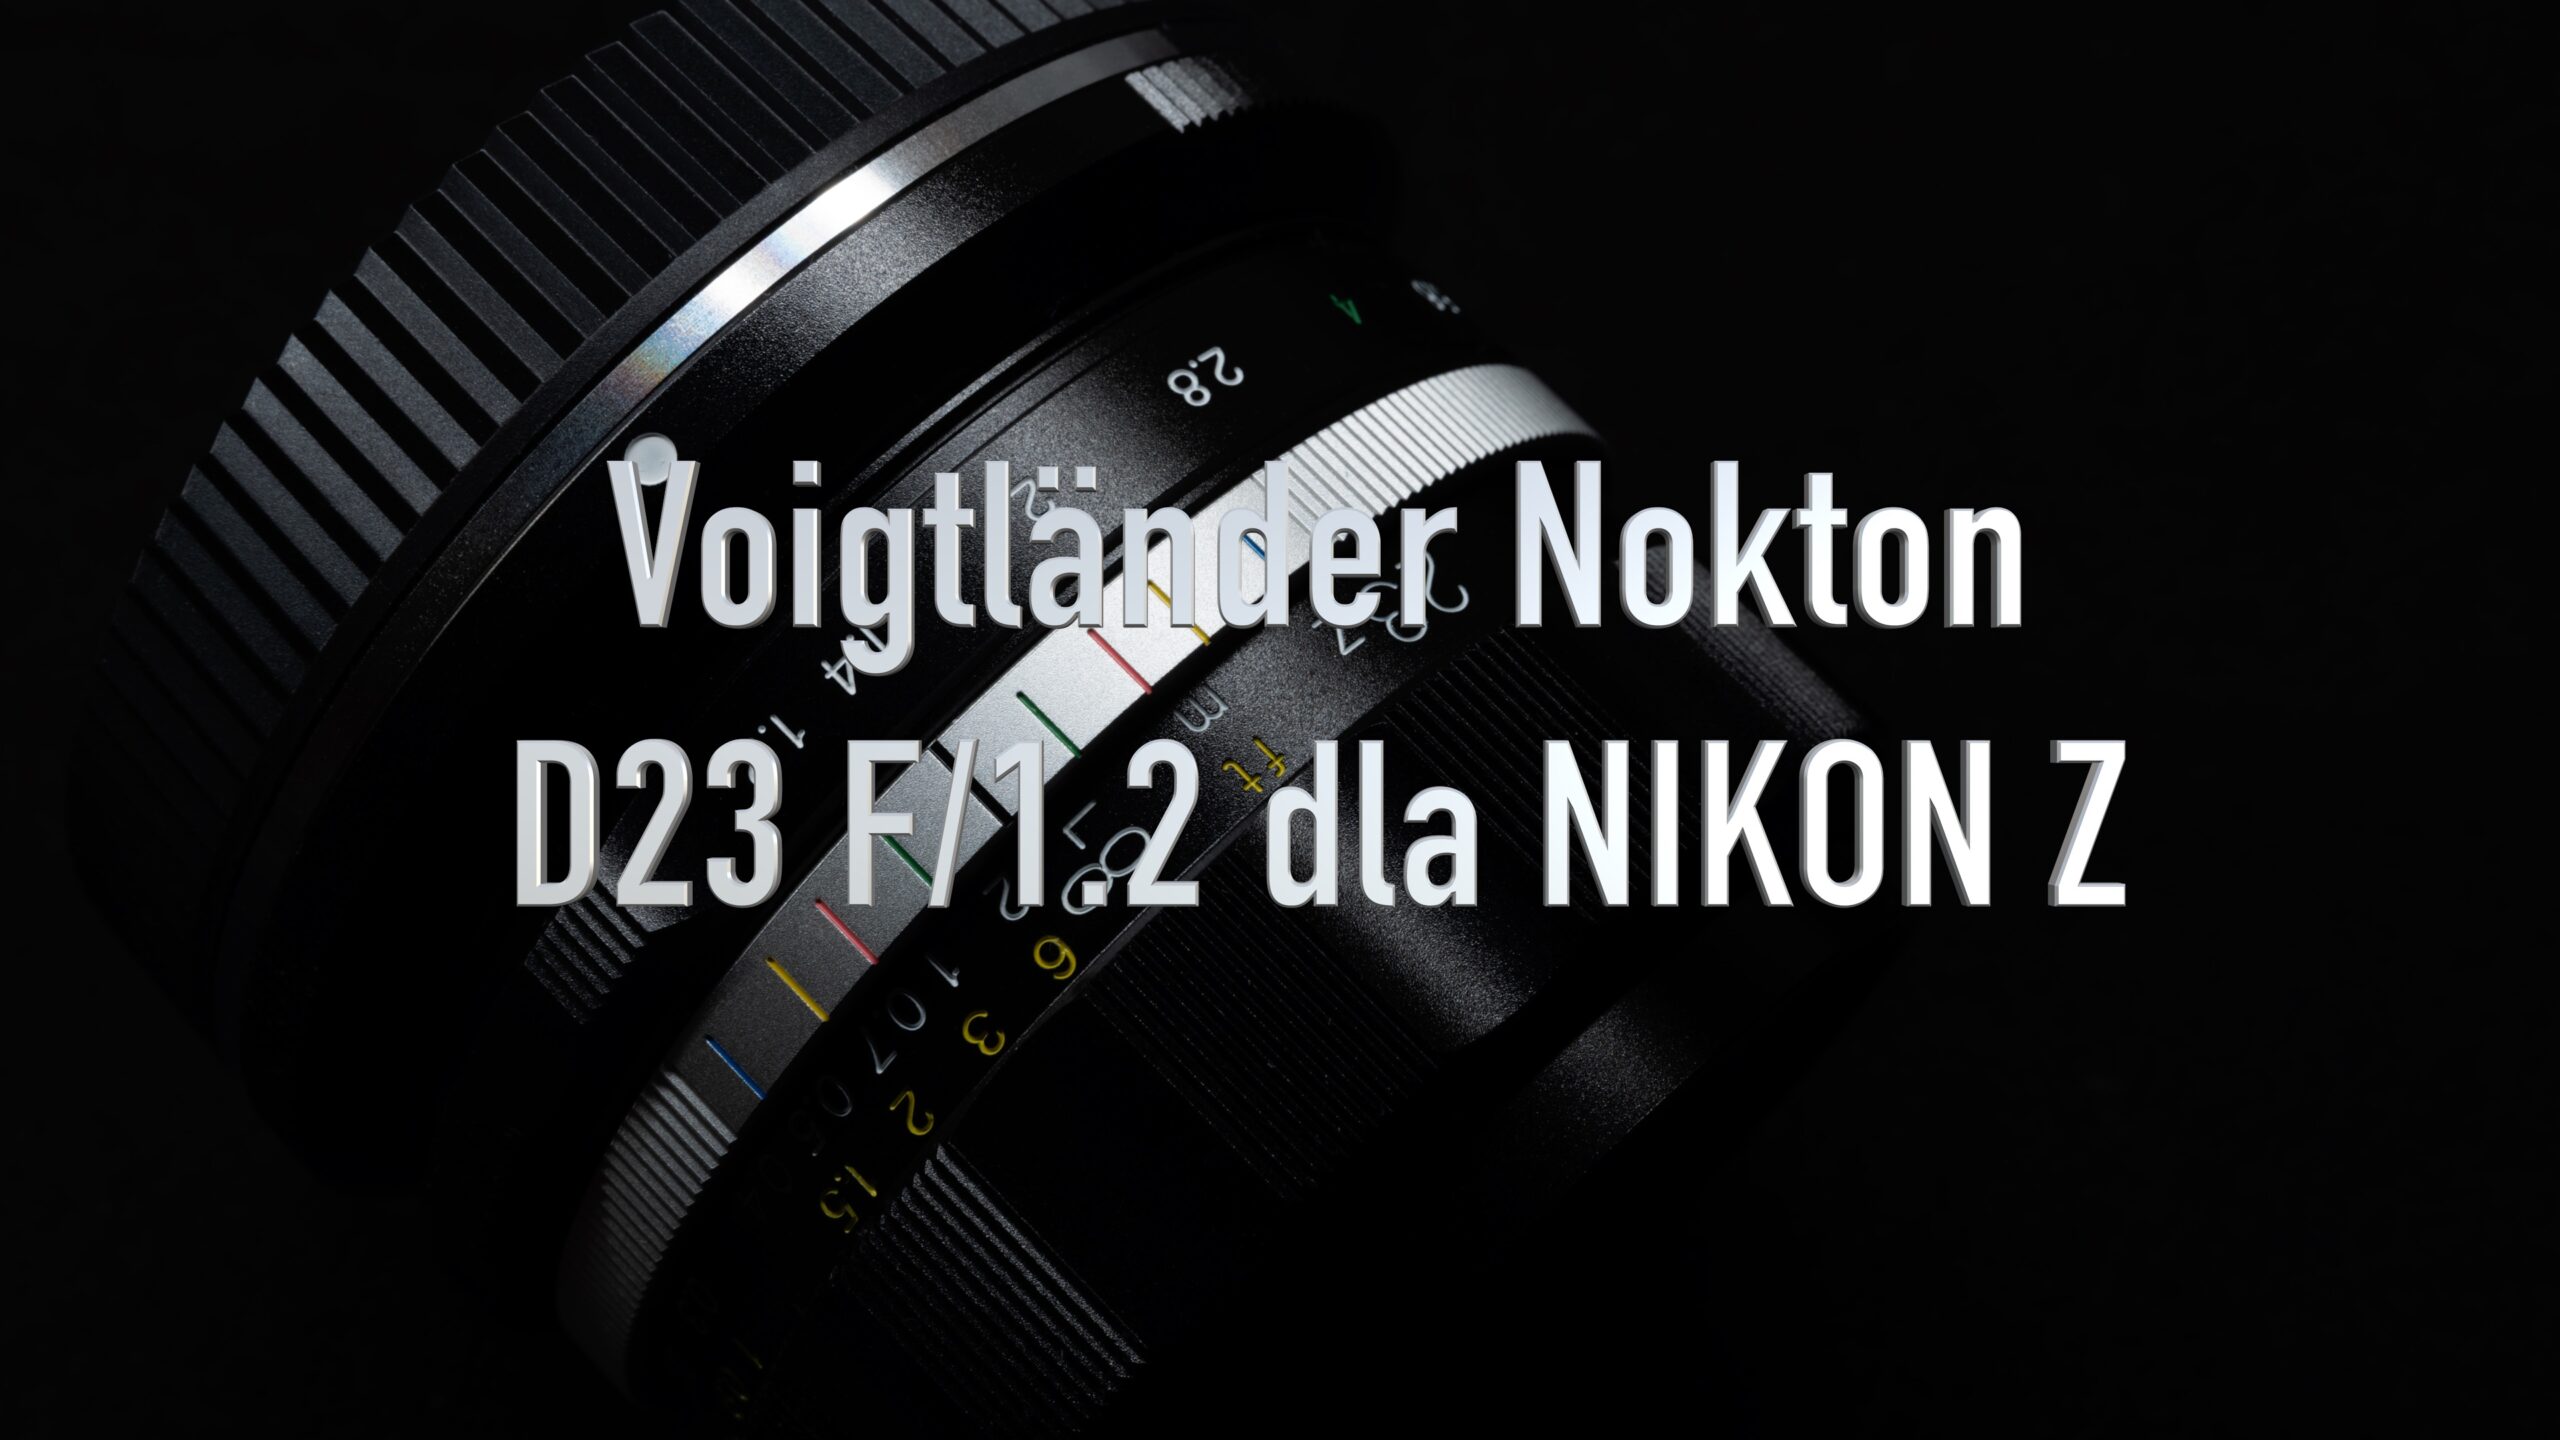 Voigtlander Nokton D23 mm F/1.2 dla Nikon Z